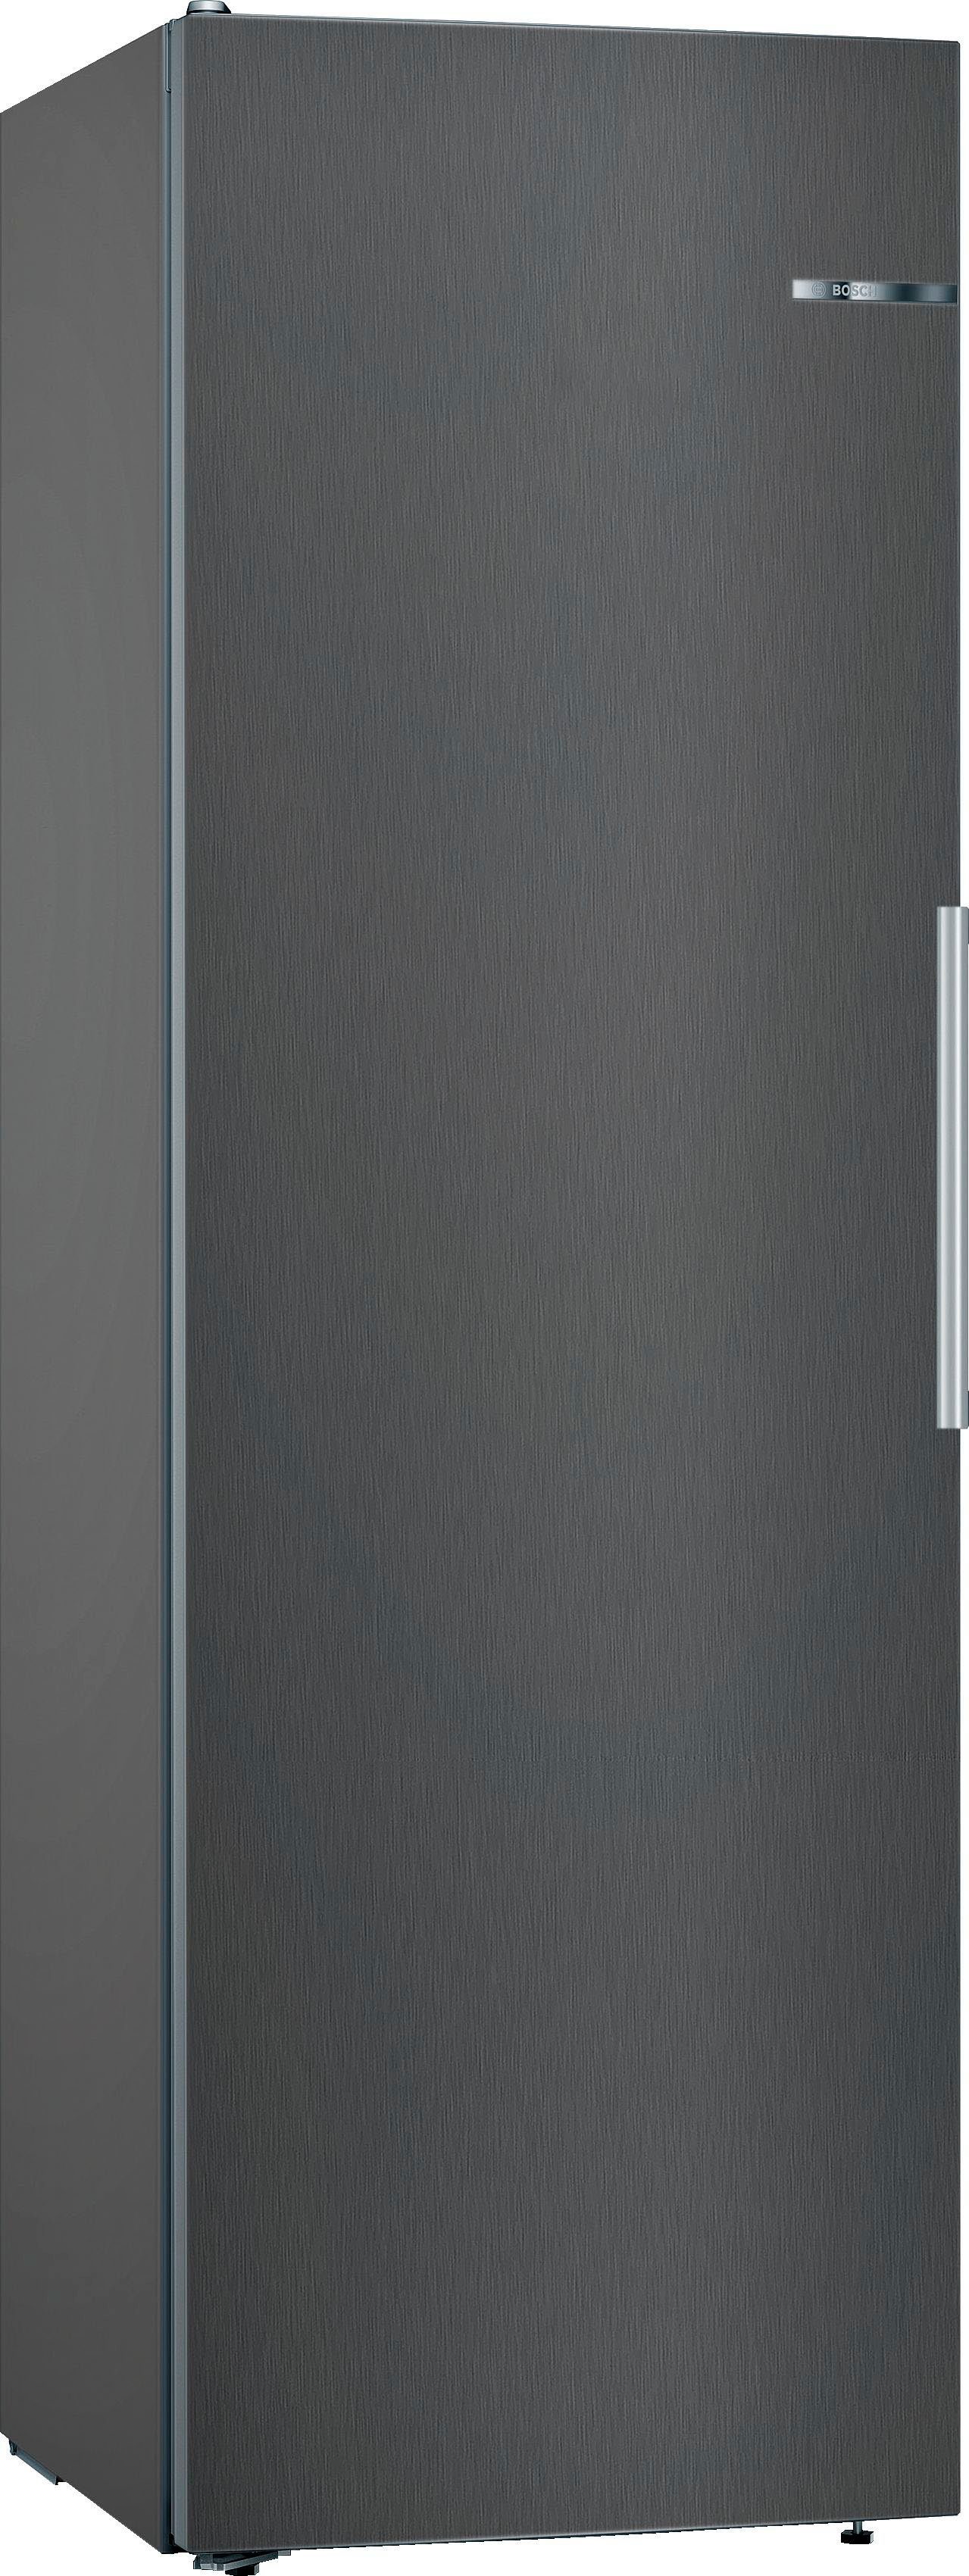 hoch, Kühlschrank BOSCH 186 cm cm KSV36VXEP, 60 breit